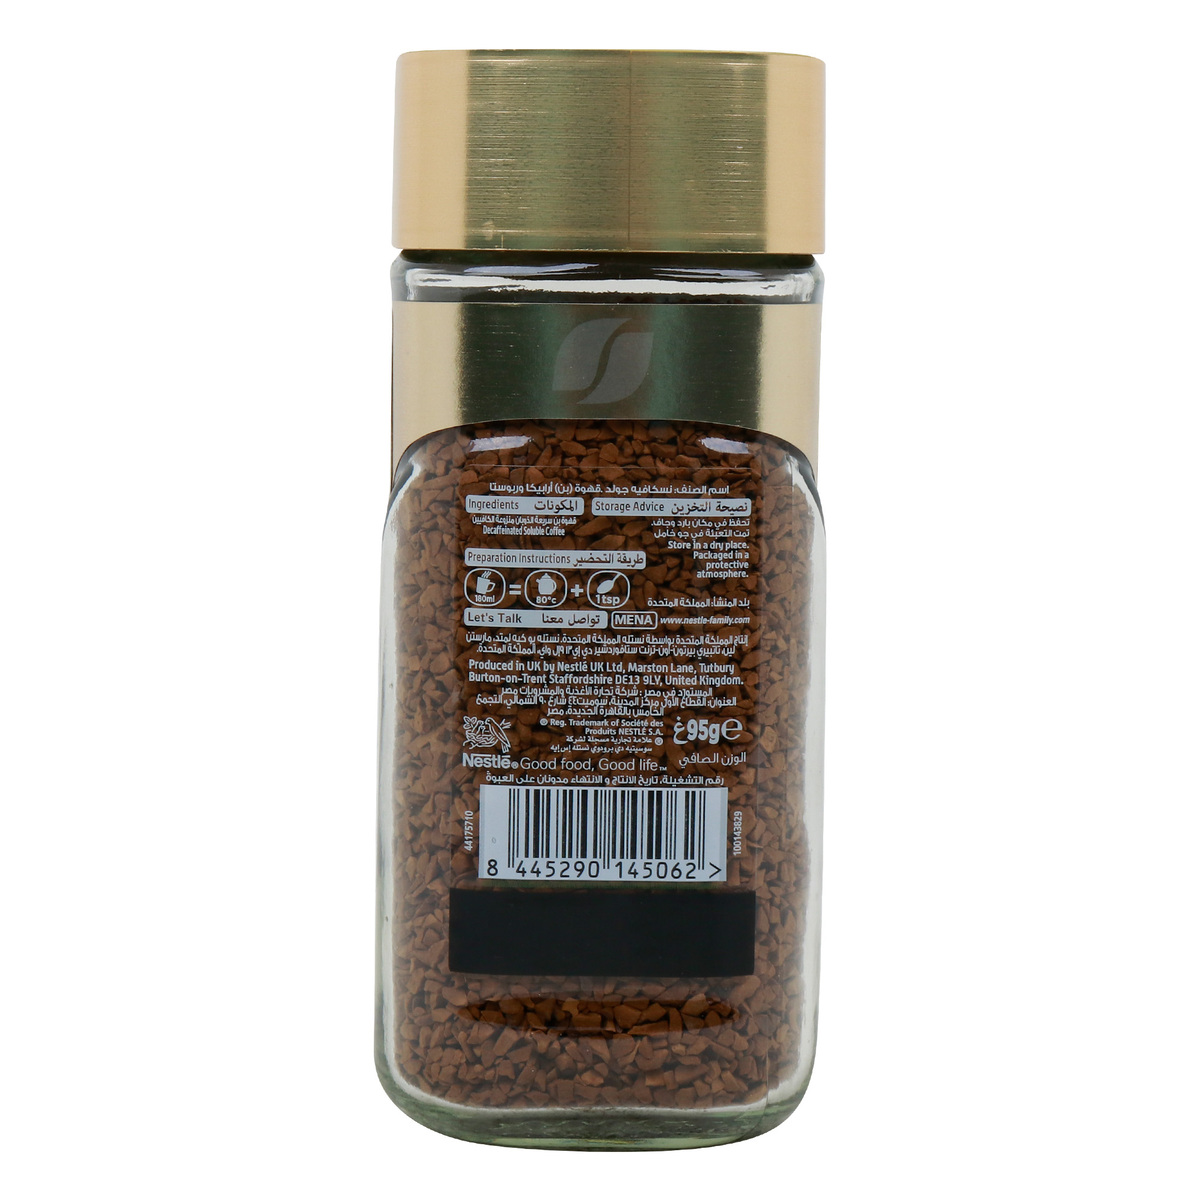 Nescafe Gold Decaf Rich Aroma & Smooth Taste, 95 g